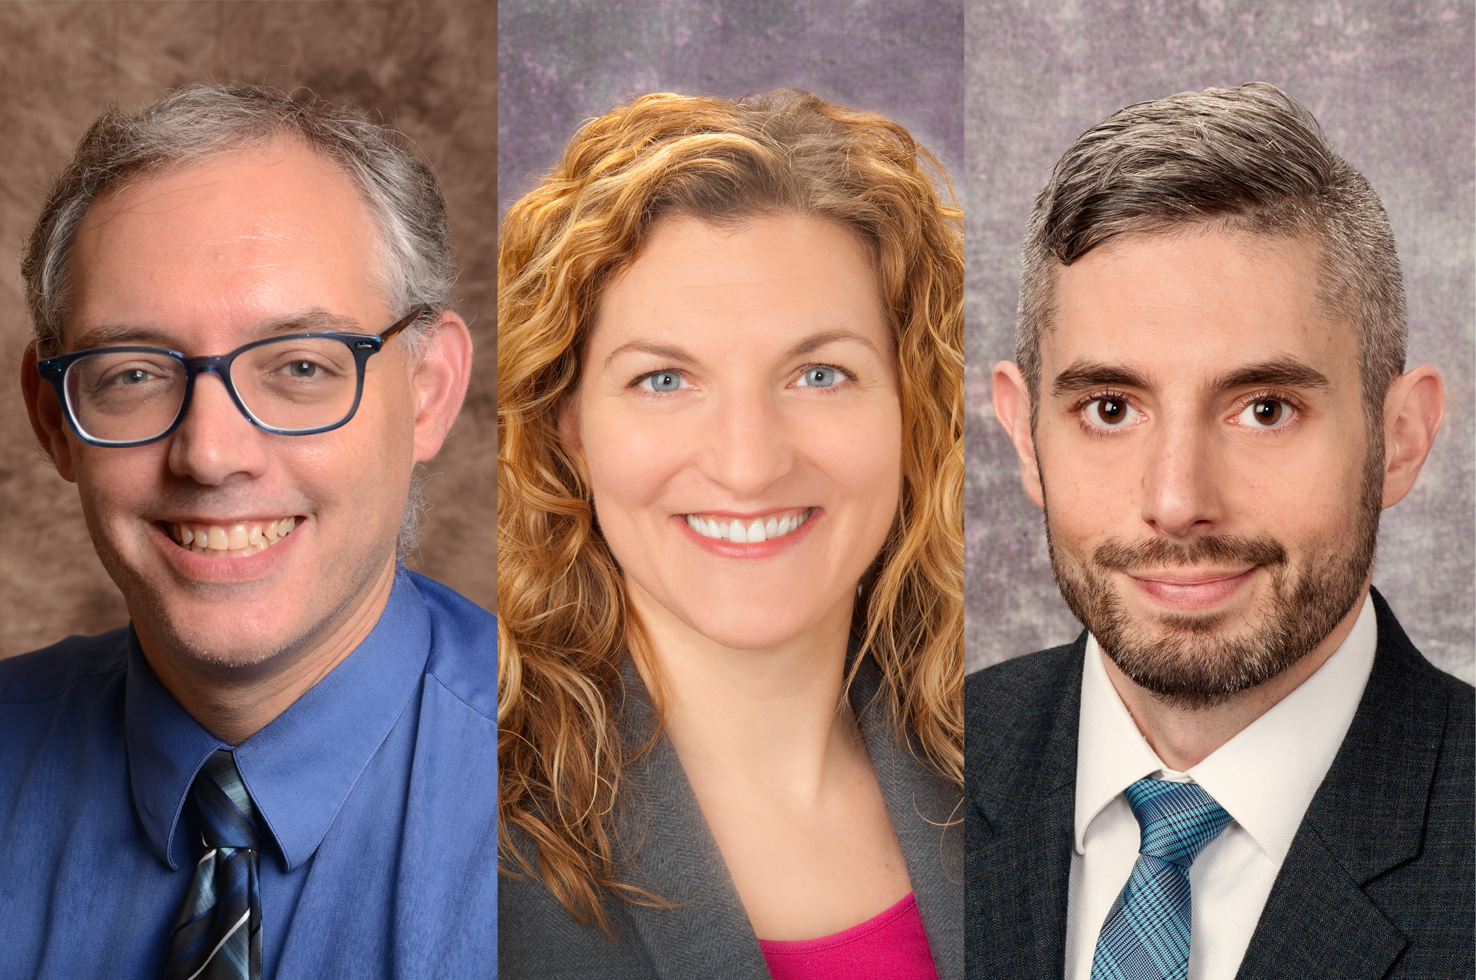 Drs. Jason Rosenstock, Jody Glance, and Pierre Azzam